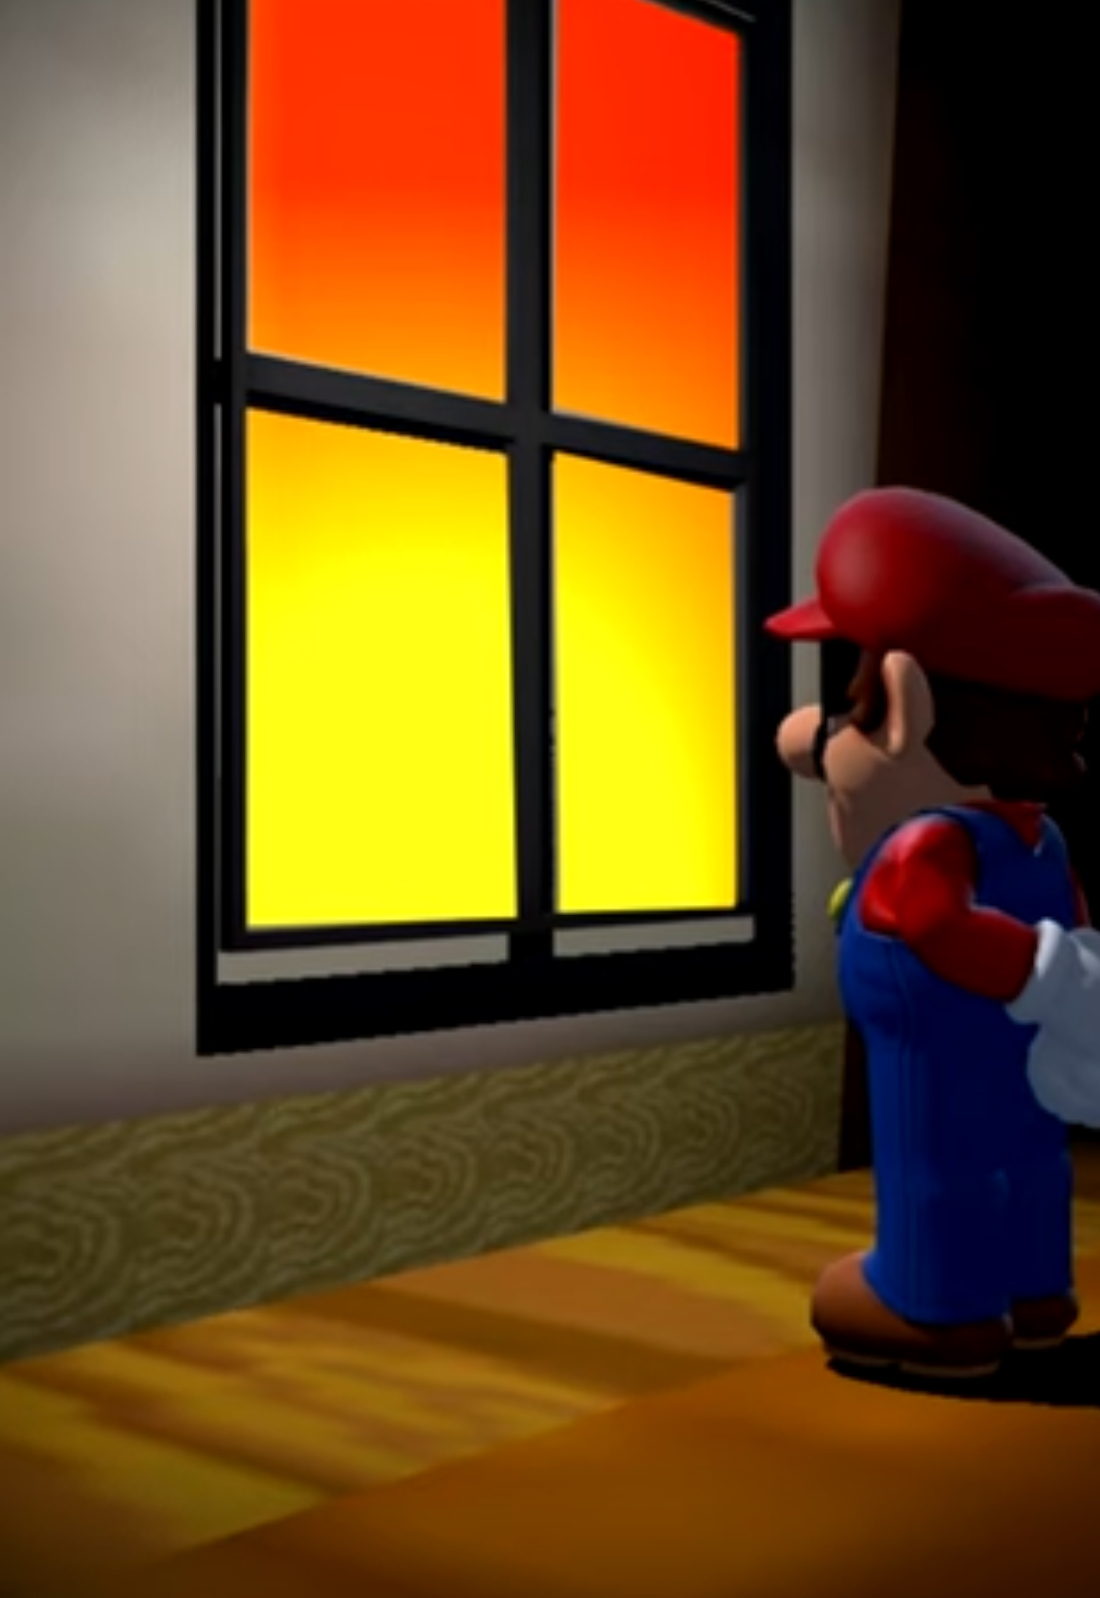 Depressed Mario Blank Meme Template